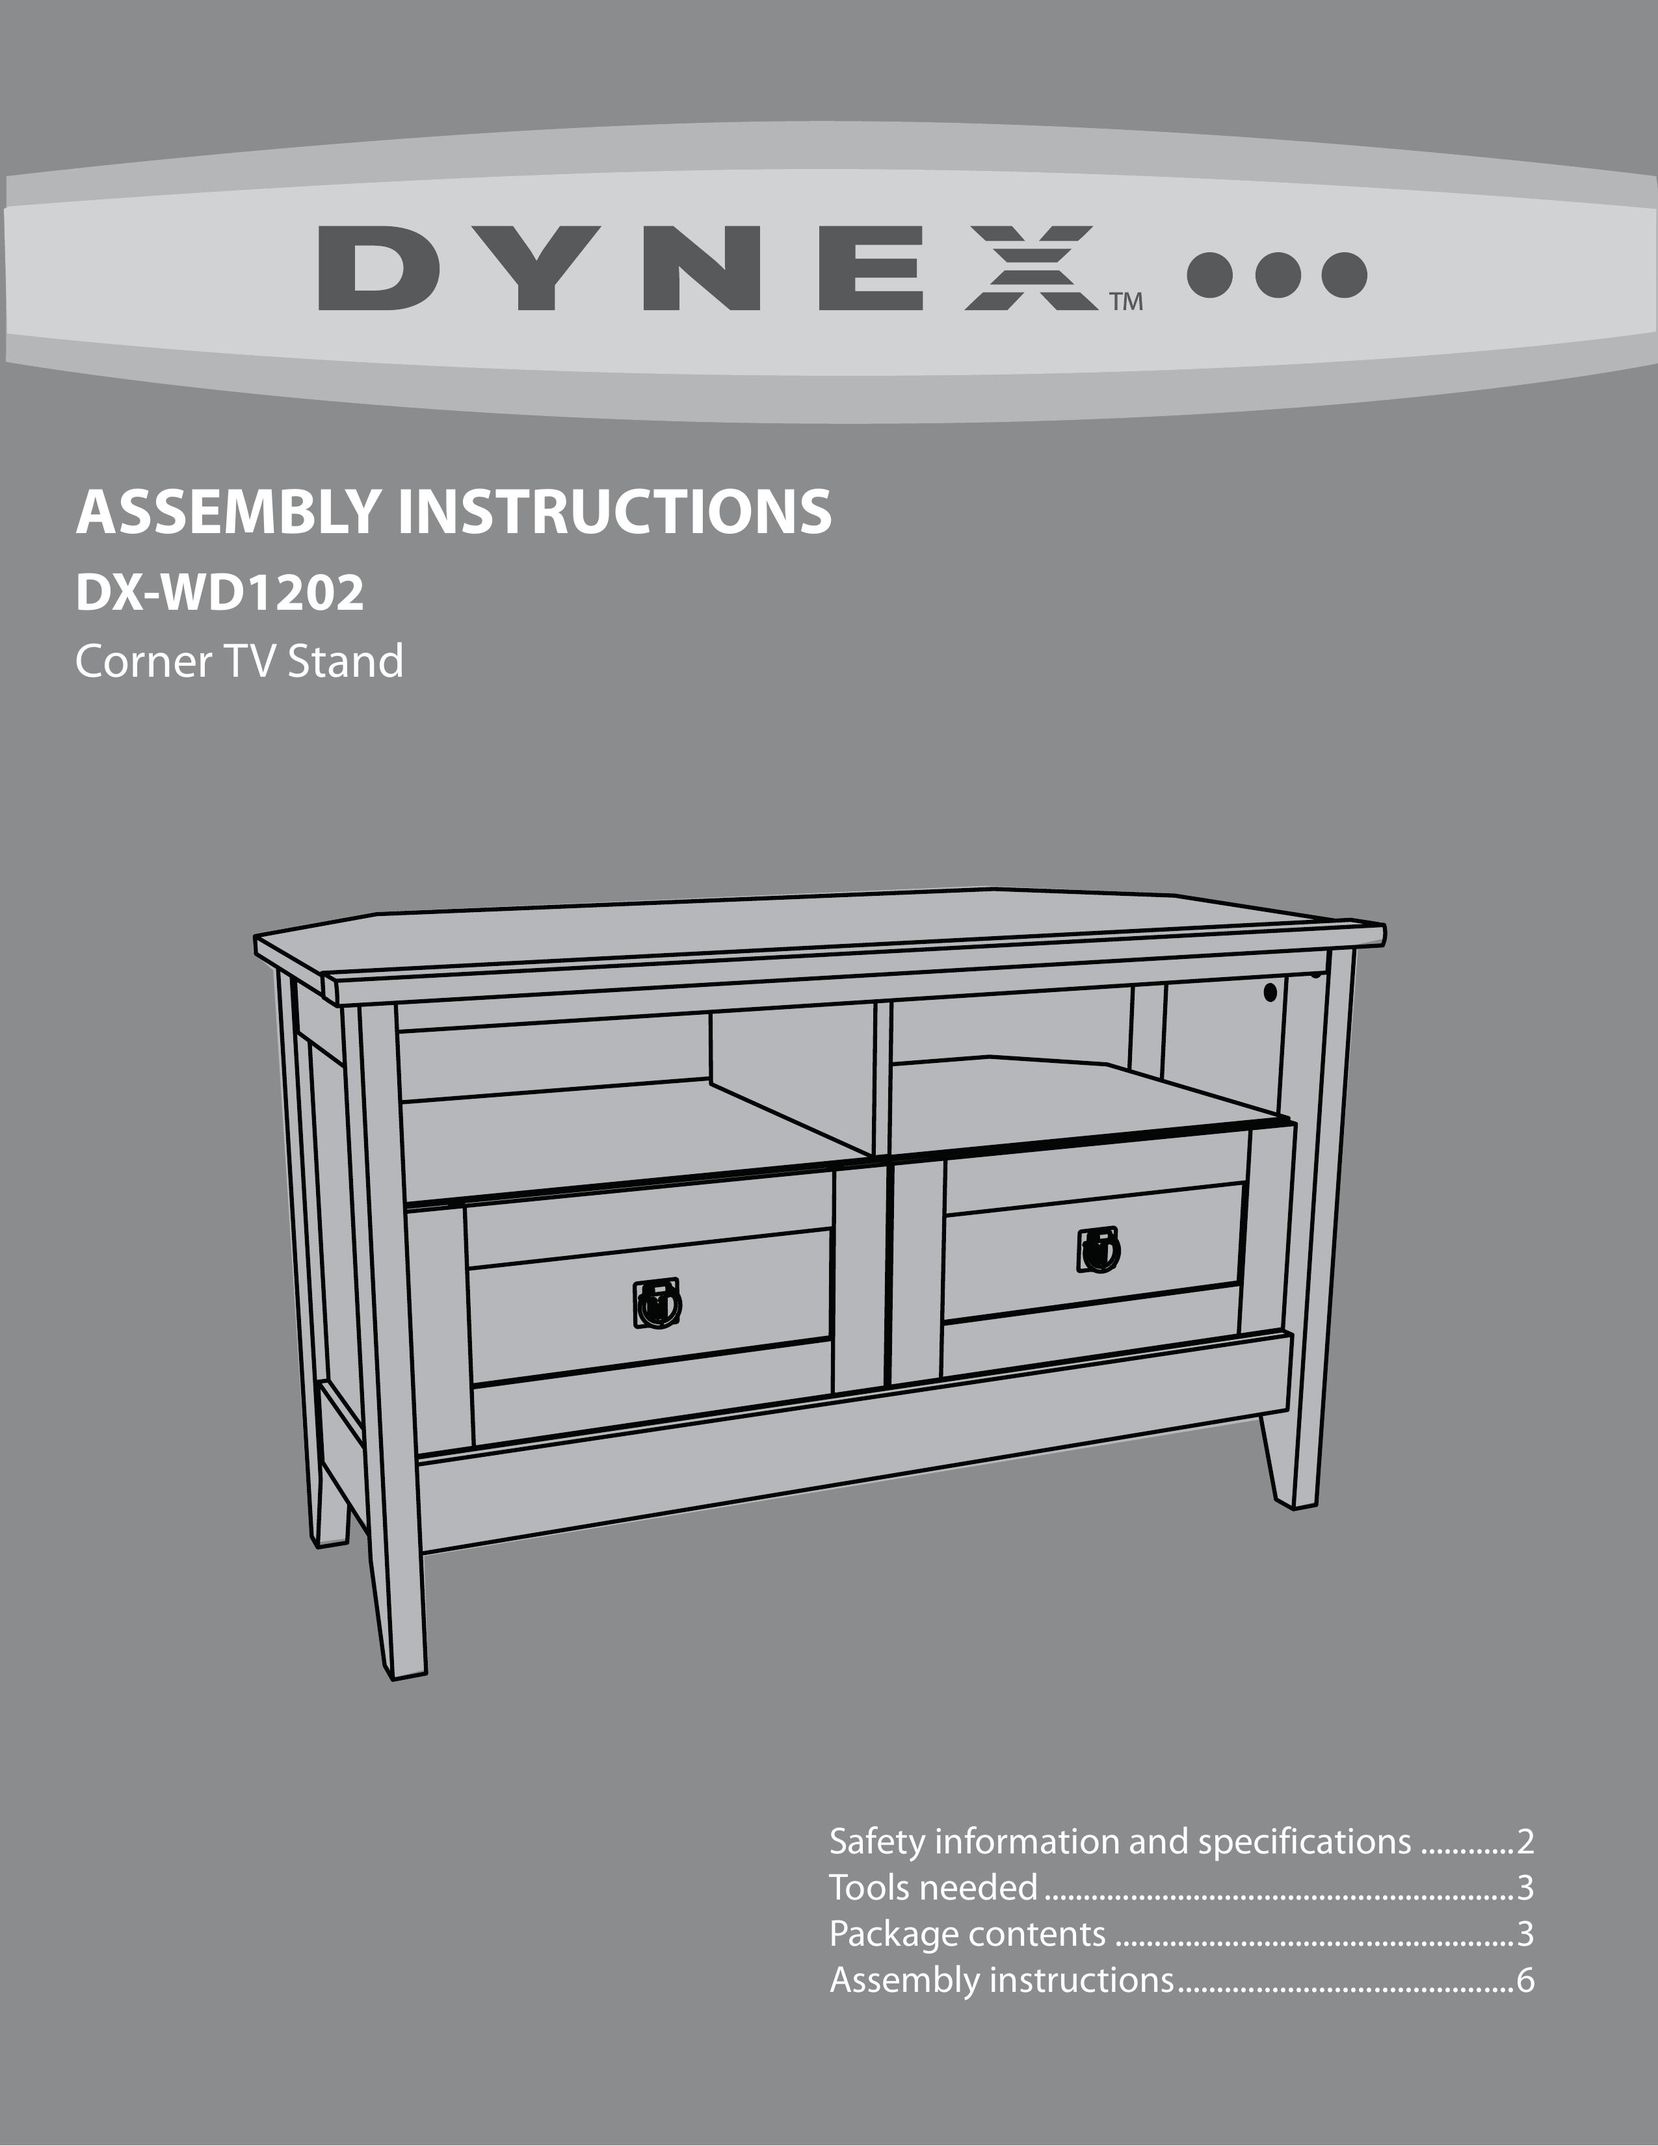 Dynex DX-WD1202 Indoor Furnishings User Manual